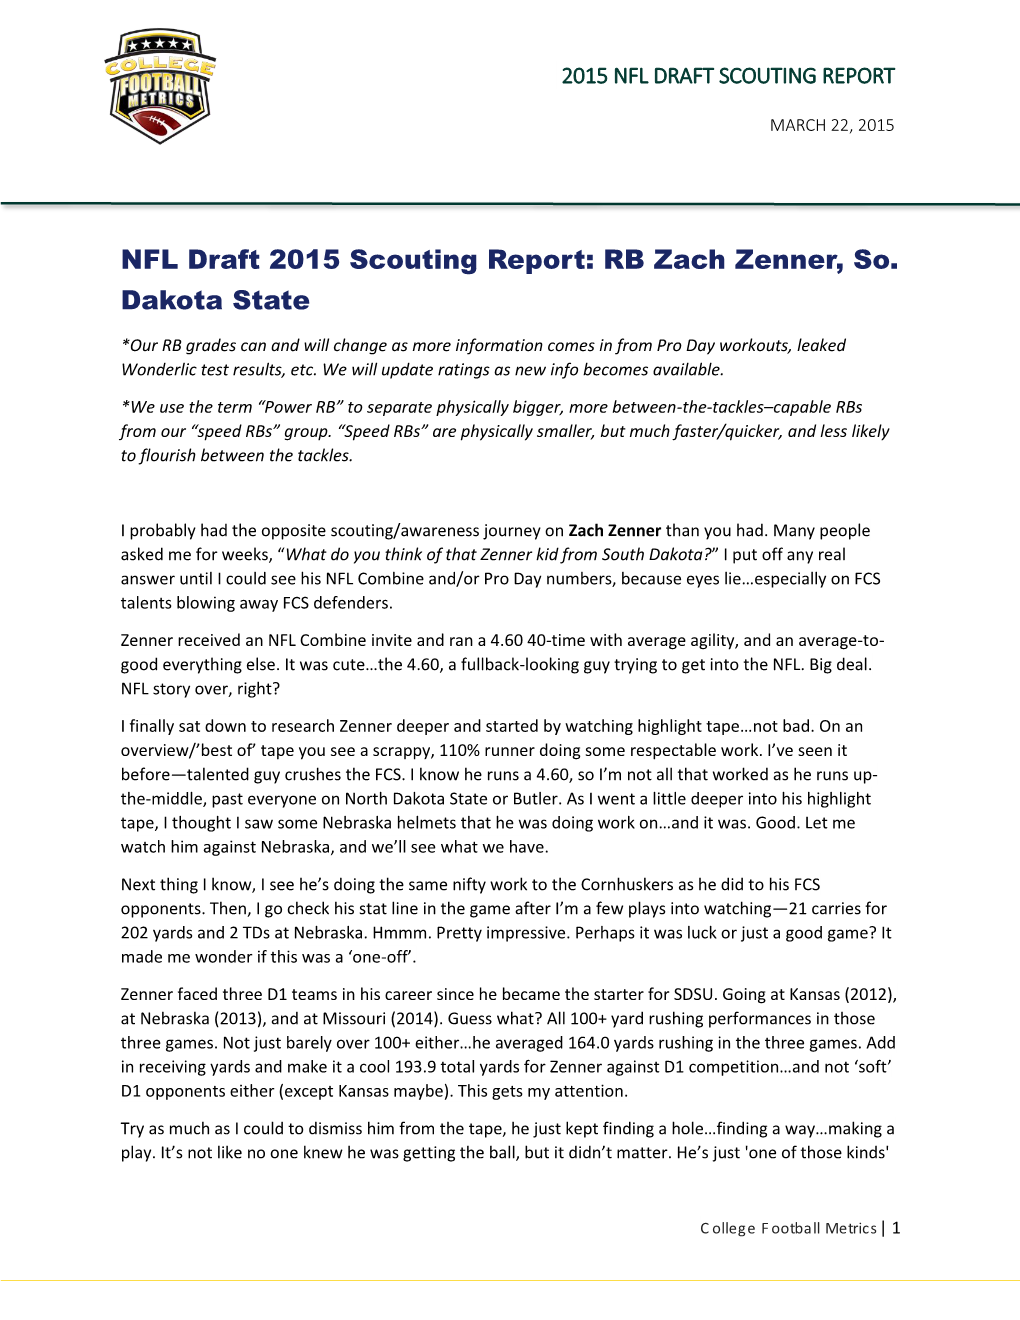 NFL Draft 2015 Scouting Report: RB Zach Zenner, So. Dakota State